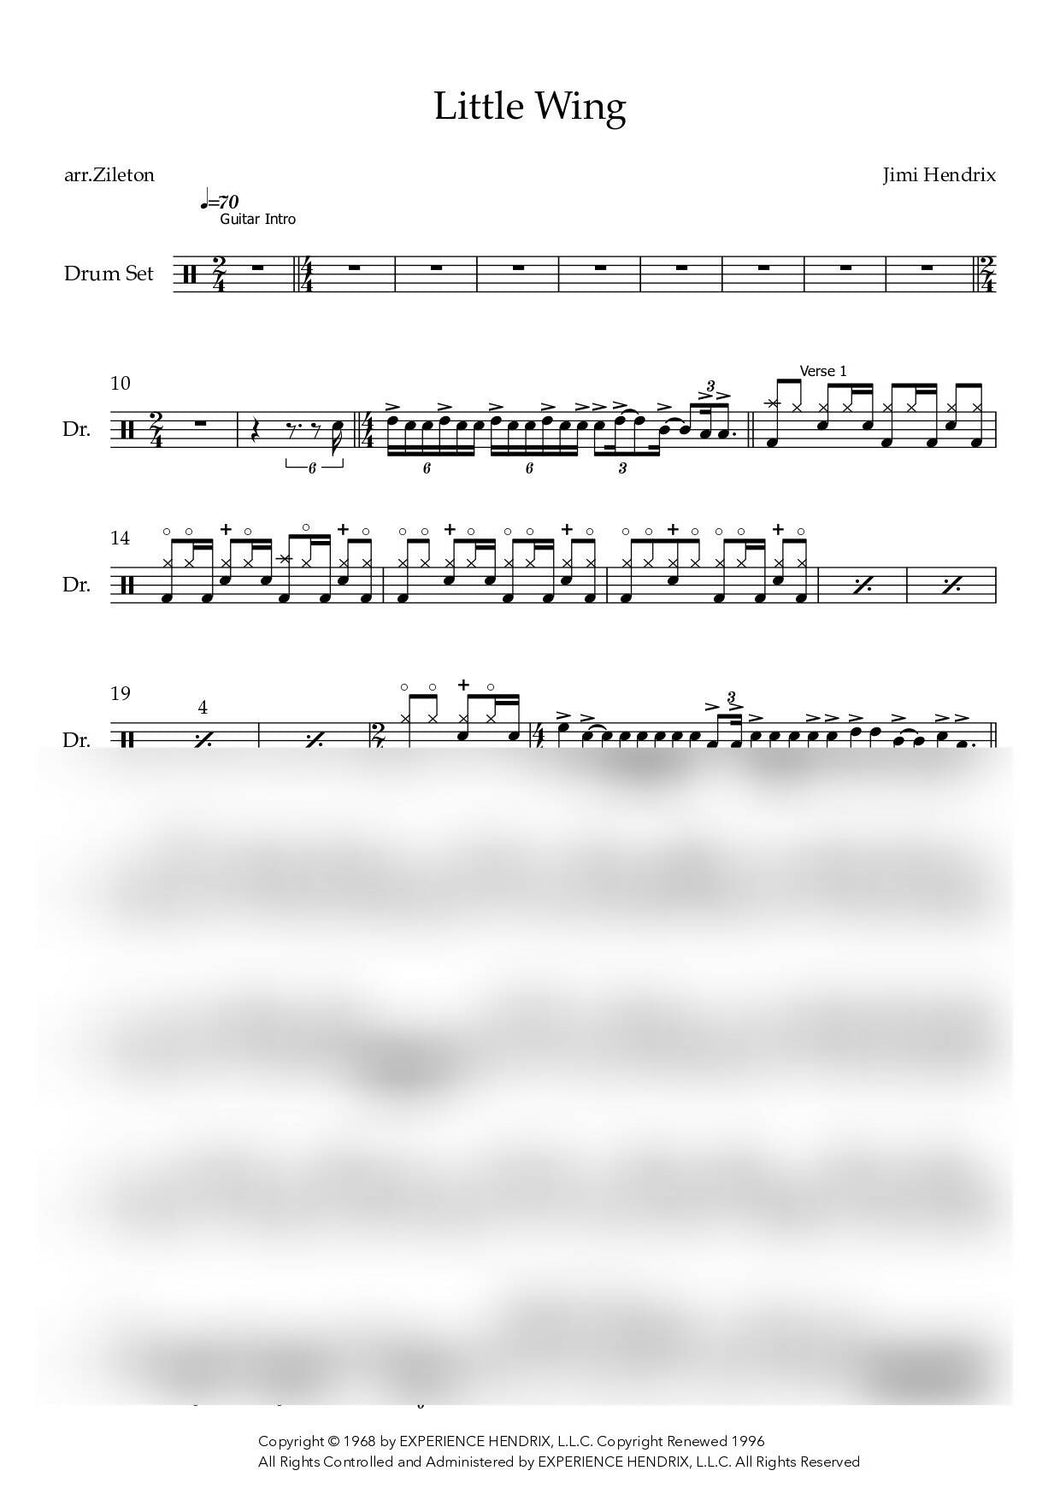 Littele Wing - Jimi Hendrix - Full Drum Transcription / Drum Sheet Music - Ziotrio